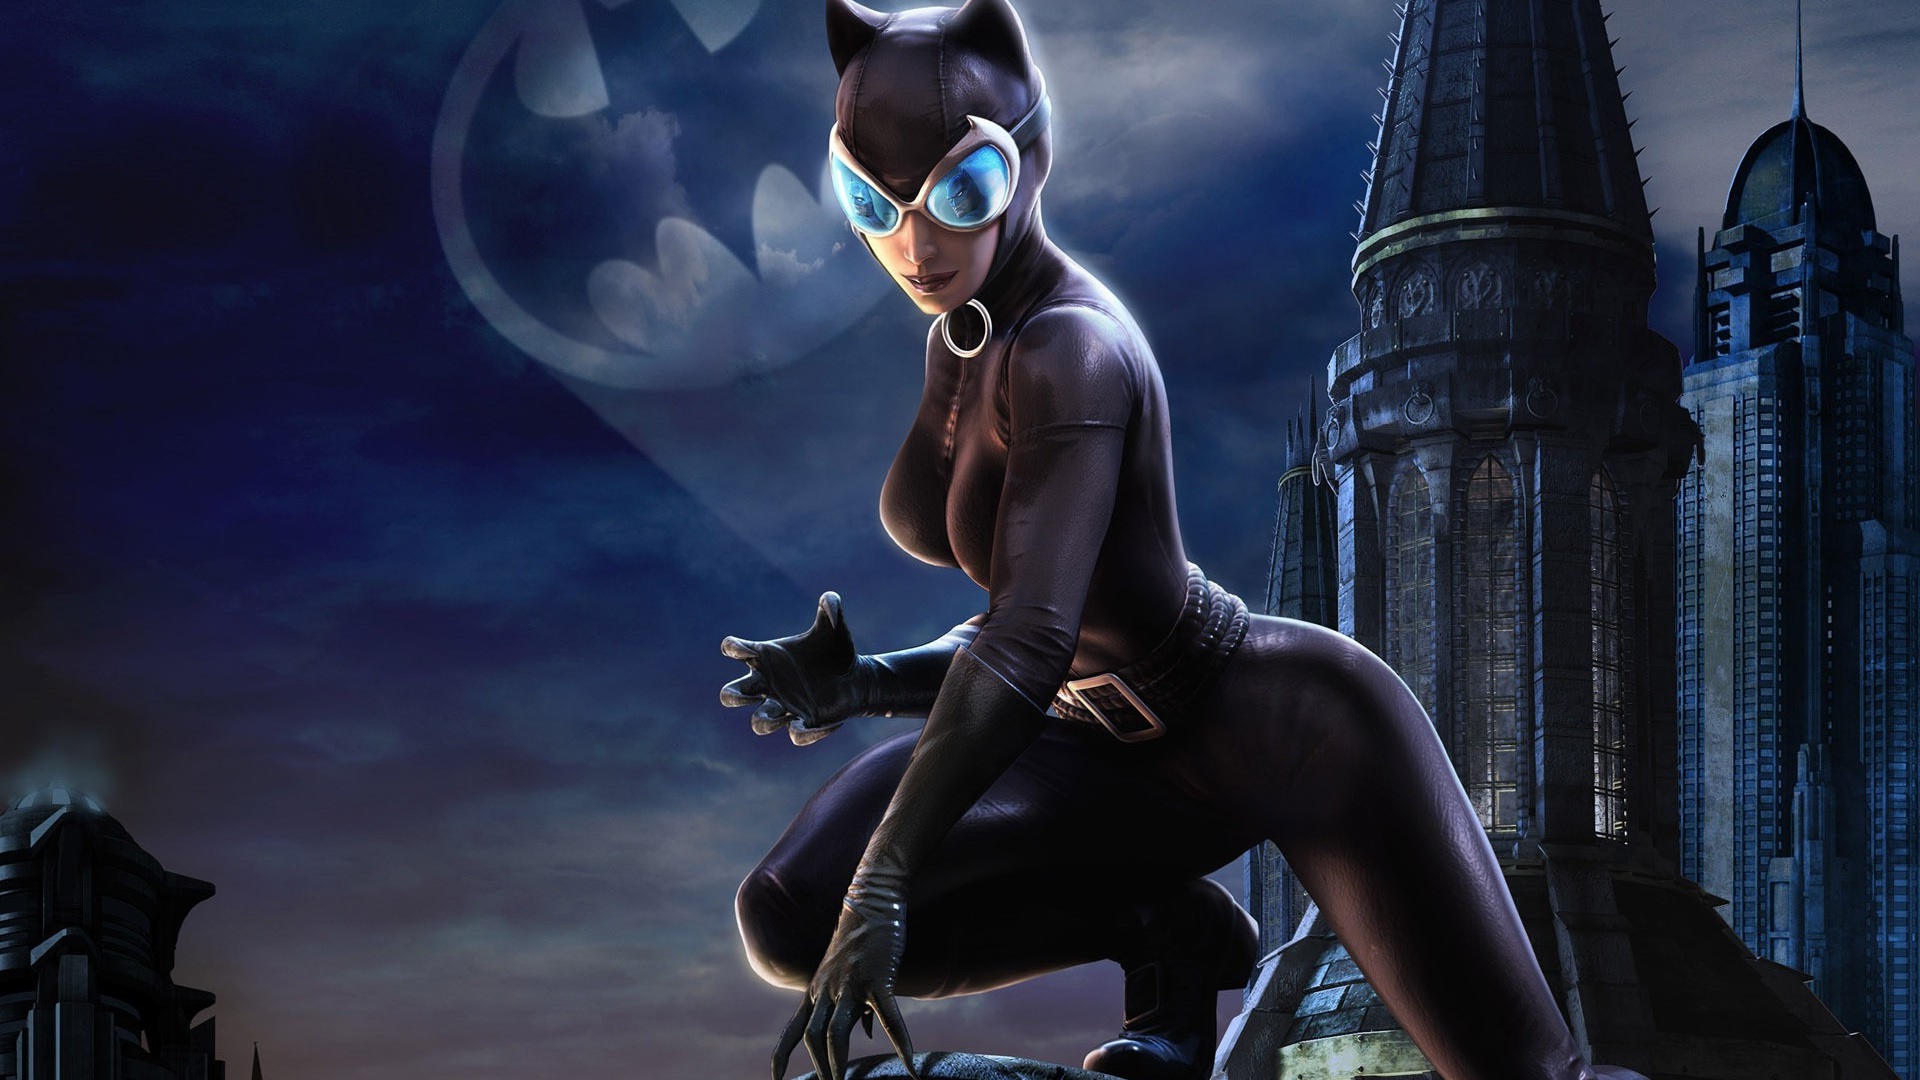 catwoman fondo de pantalla hd,personaje de ficción,catwoman,cg artwork,hombre murciélago,supervillano